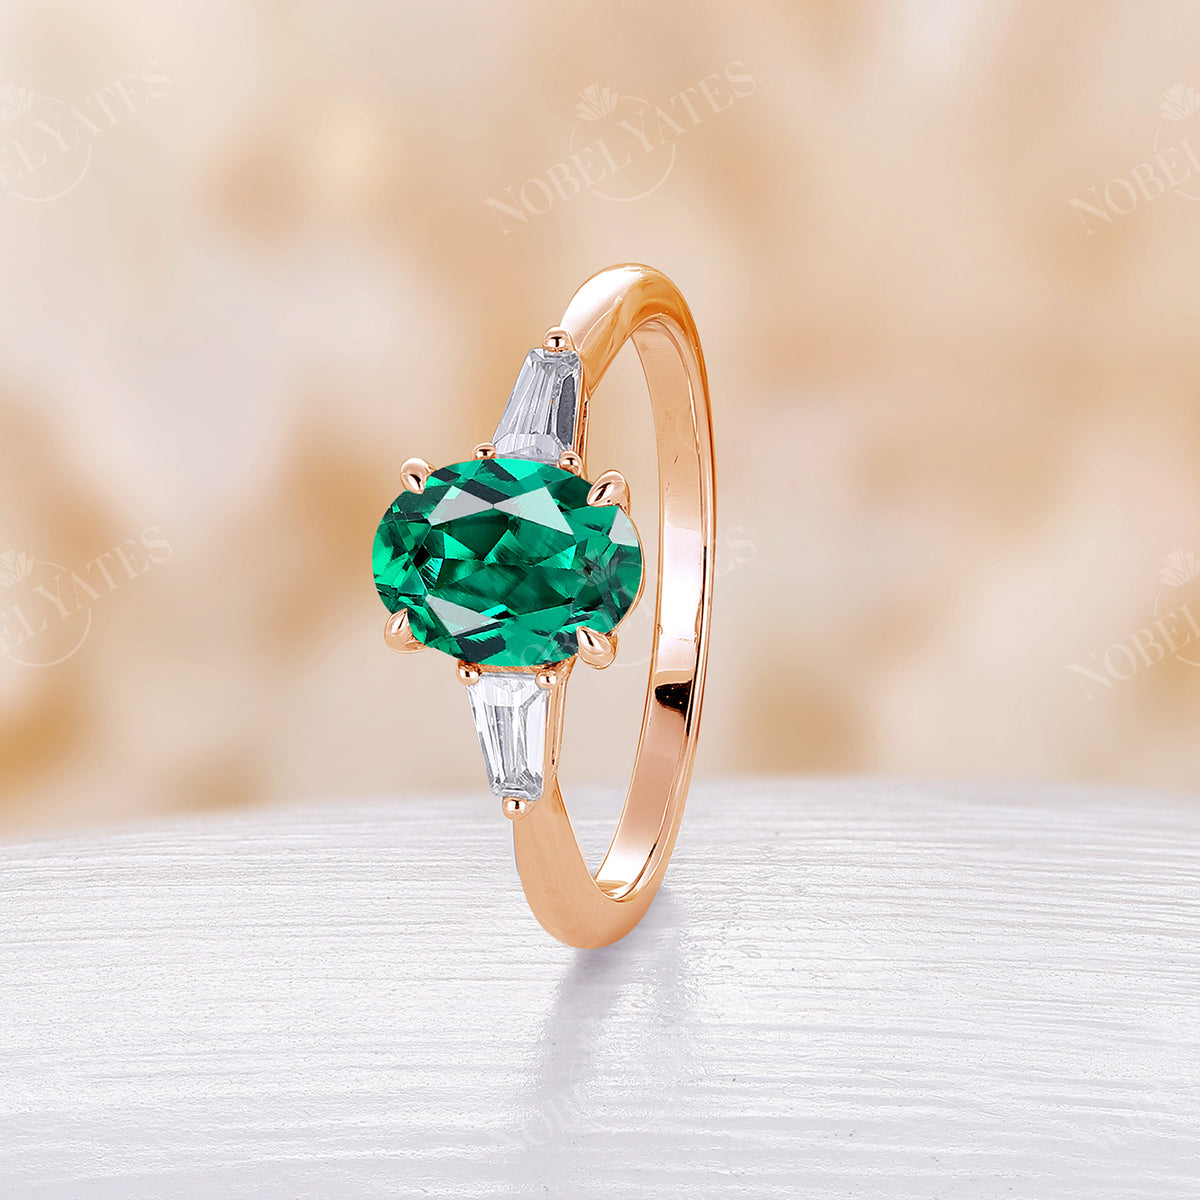 Art Deco Classic Oval Lab Emerald Engagement Ring Three Stones